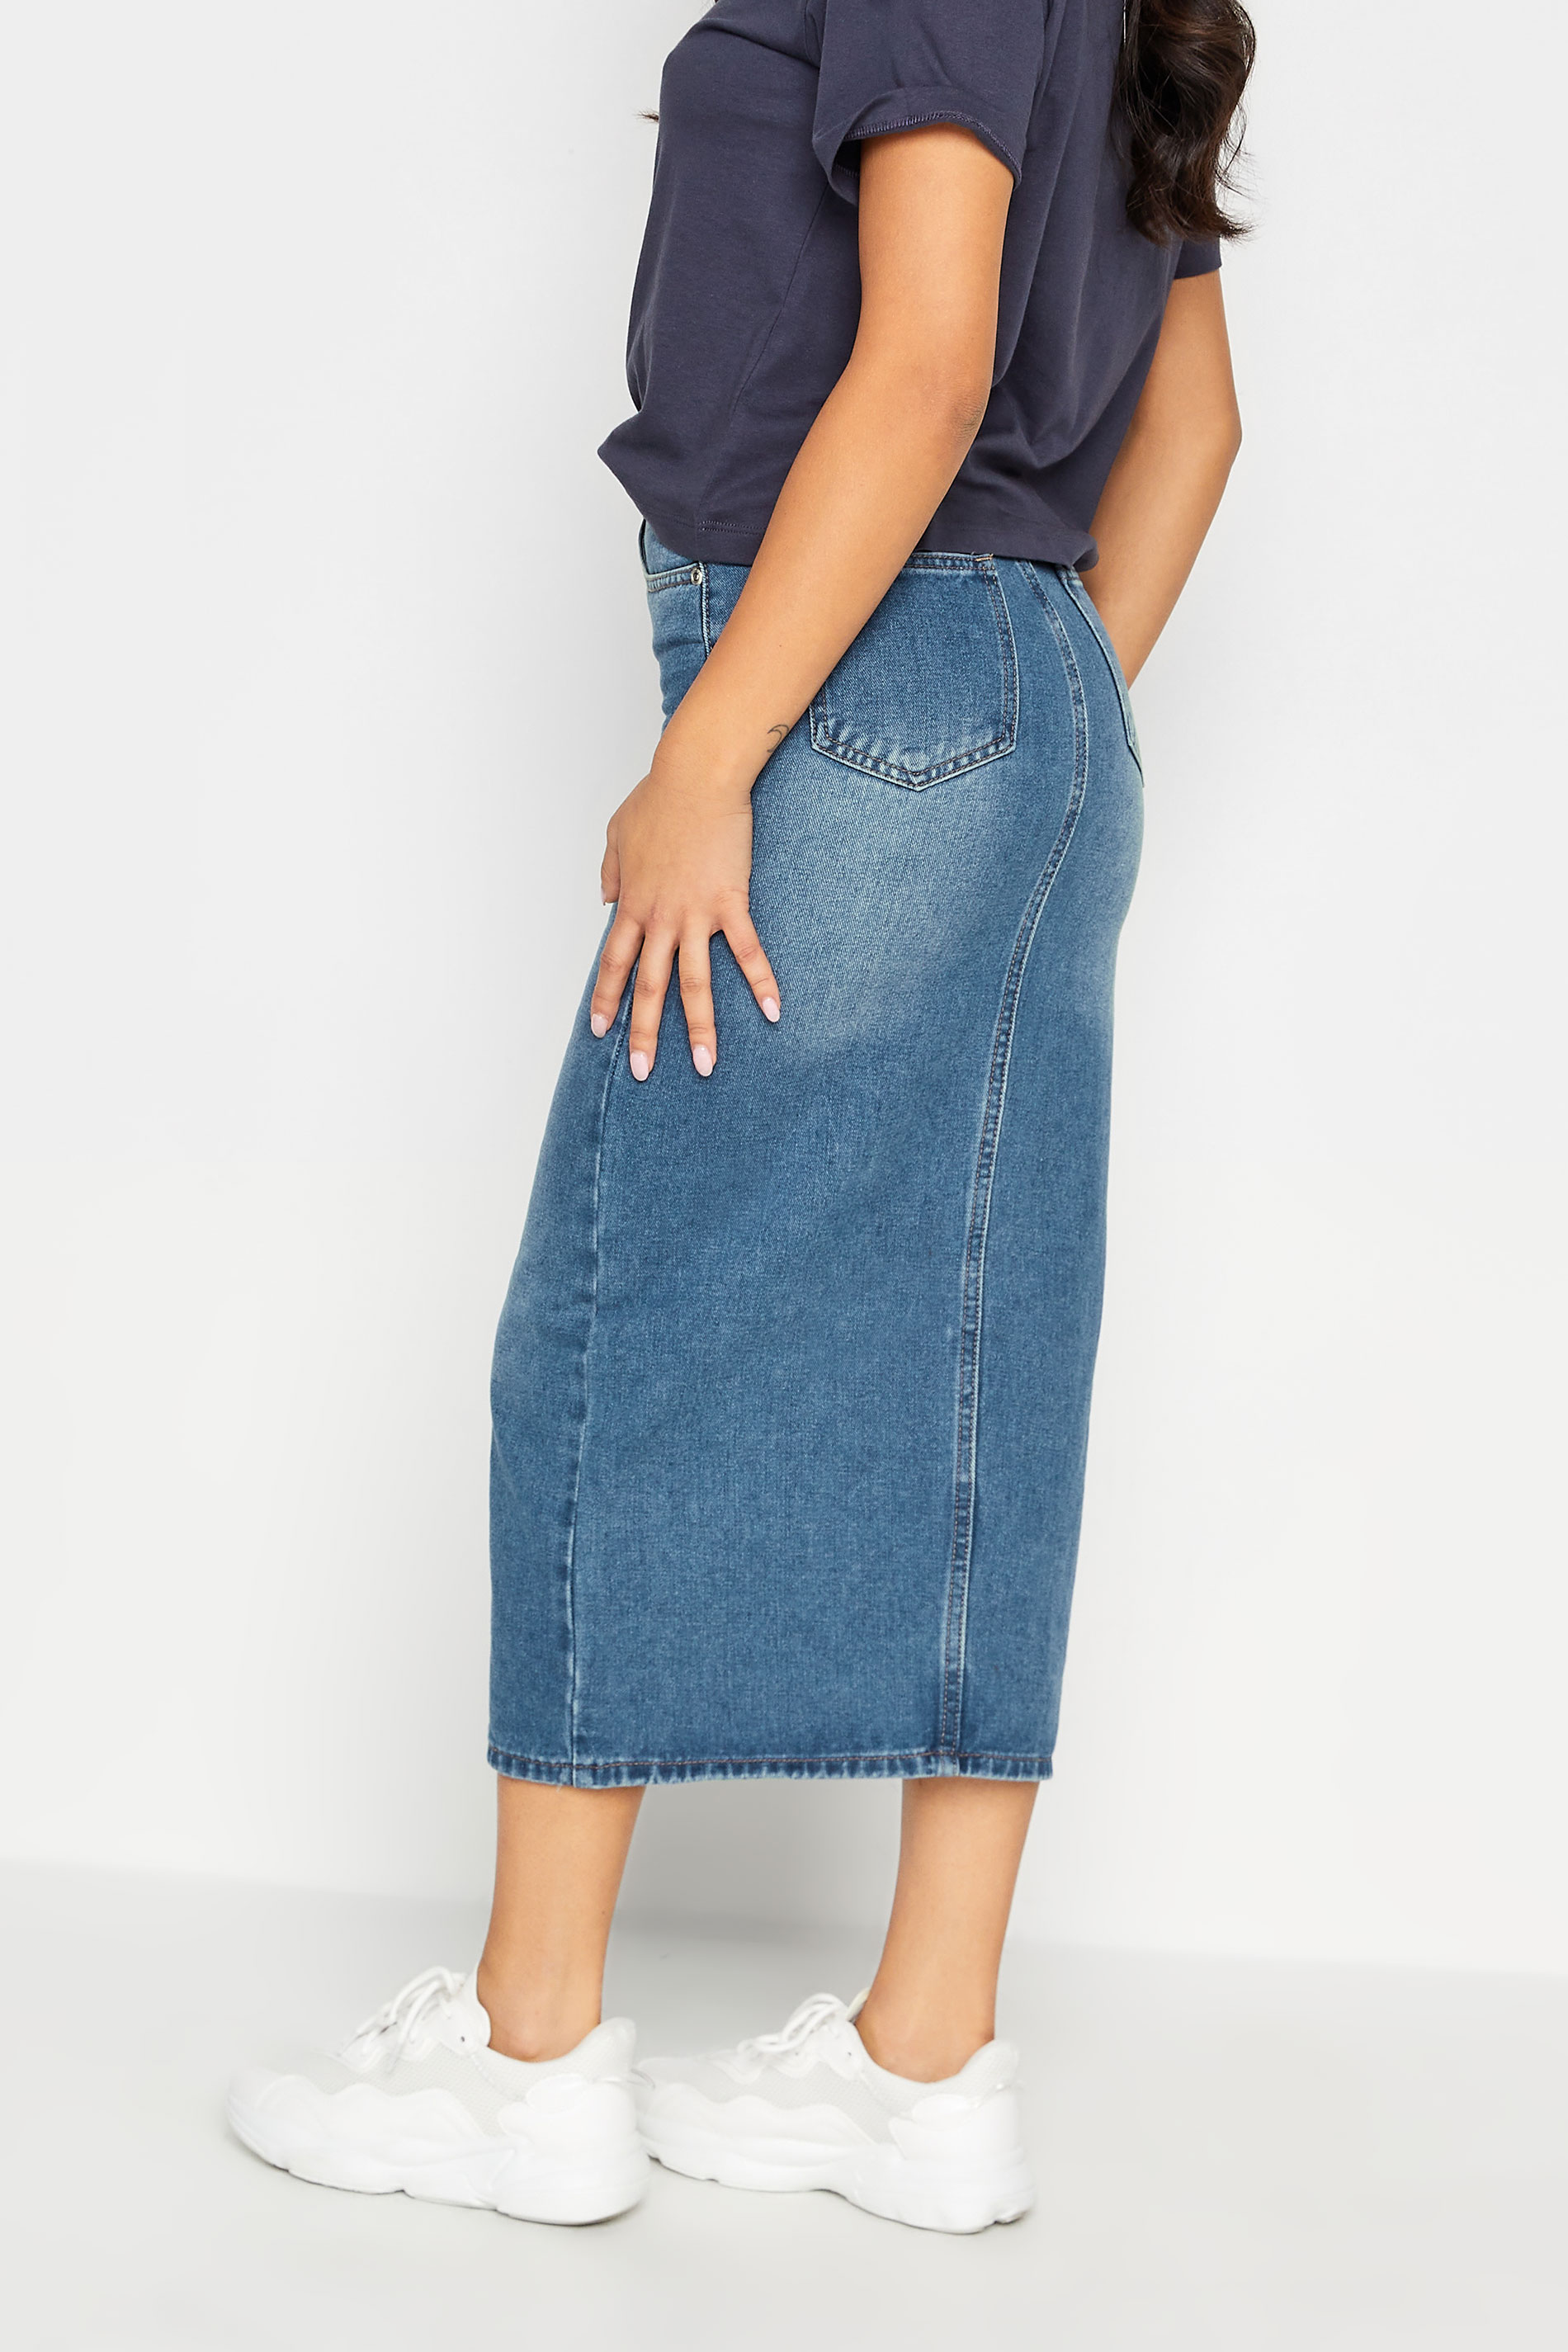 PixieGirl Blue Denim Midi Skirt | PixieGirl 2